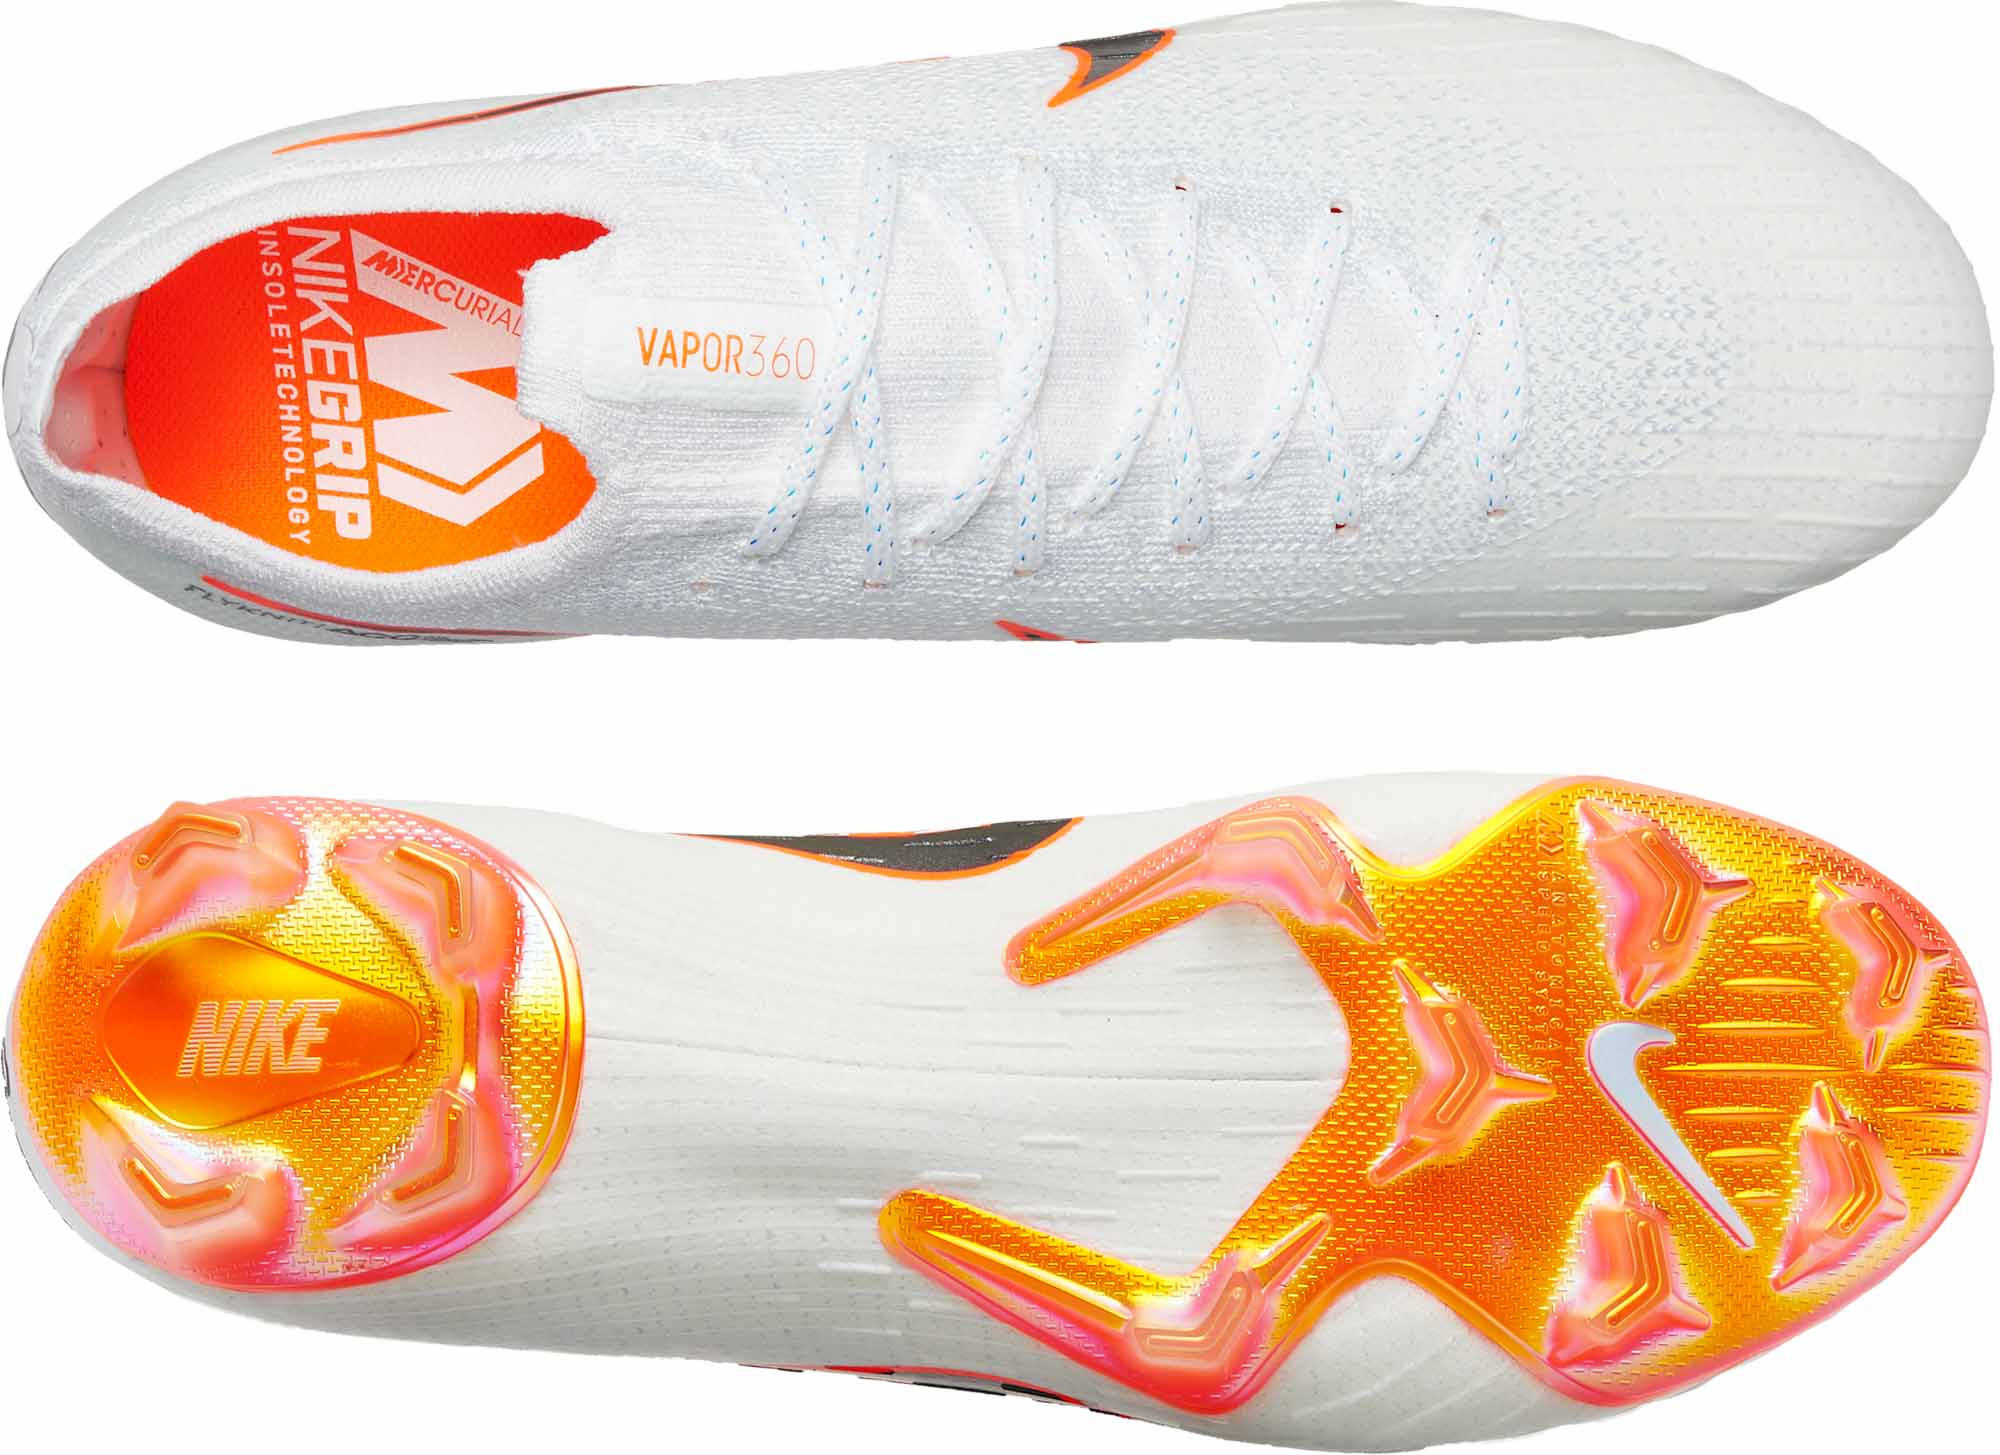 Nike Mercurial Vapor Iv Fg Orange Peel Cheap La Scighera